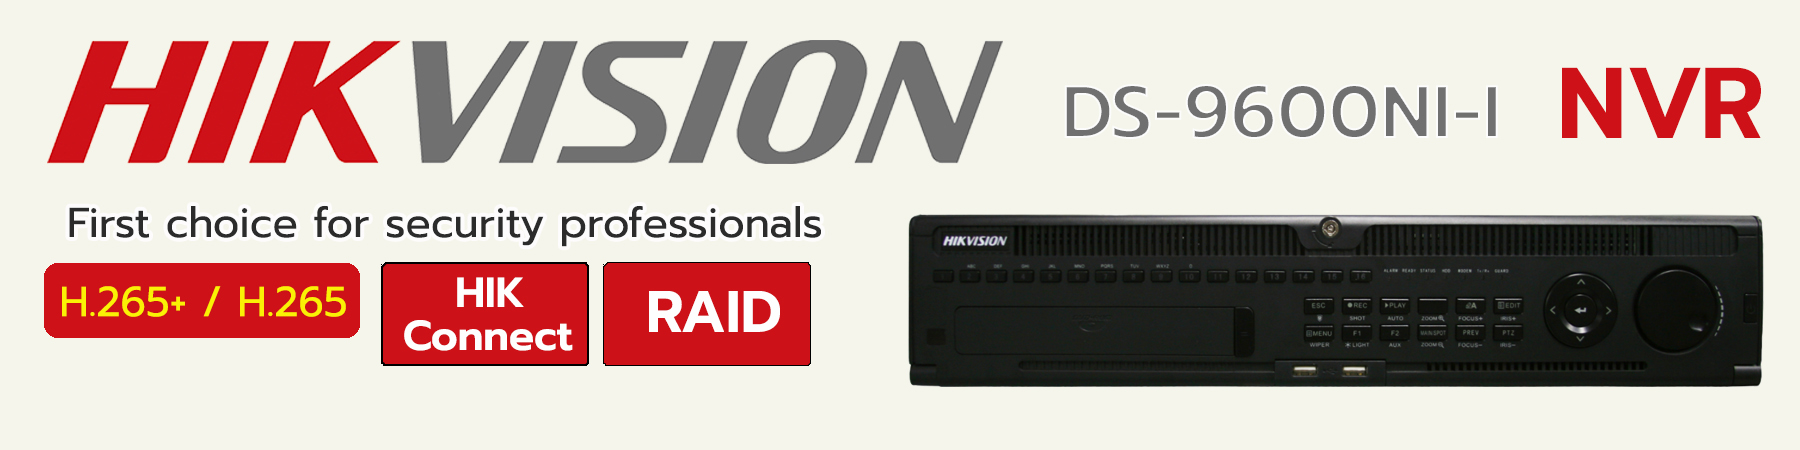 Hikvision NVR, Hikvision Network Video Recorder, เครื่องบันทึก Hikvision NVR, DS-9632NI-I8, DS-9632NI-I8 ราคา, DS-9632NI-I16, DS-9632NI-I16 ราคา, DS-9664NI-I8, DS-9664NI-I8 ราคา, DS-9664NI-I16, DS-9664NI-I16 ราคา